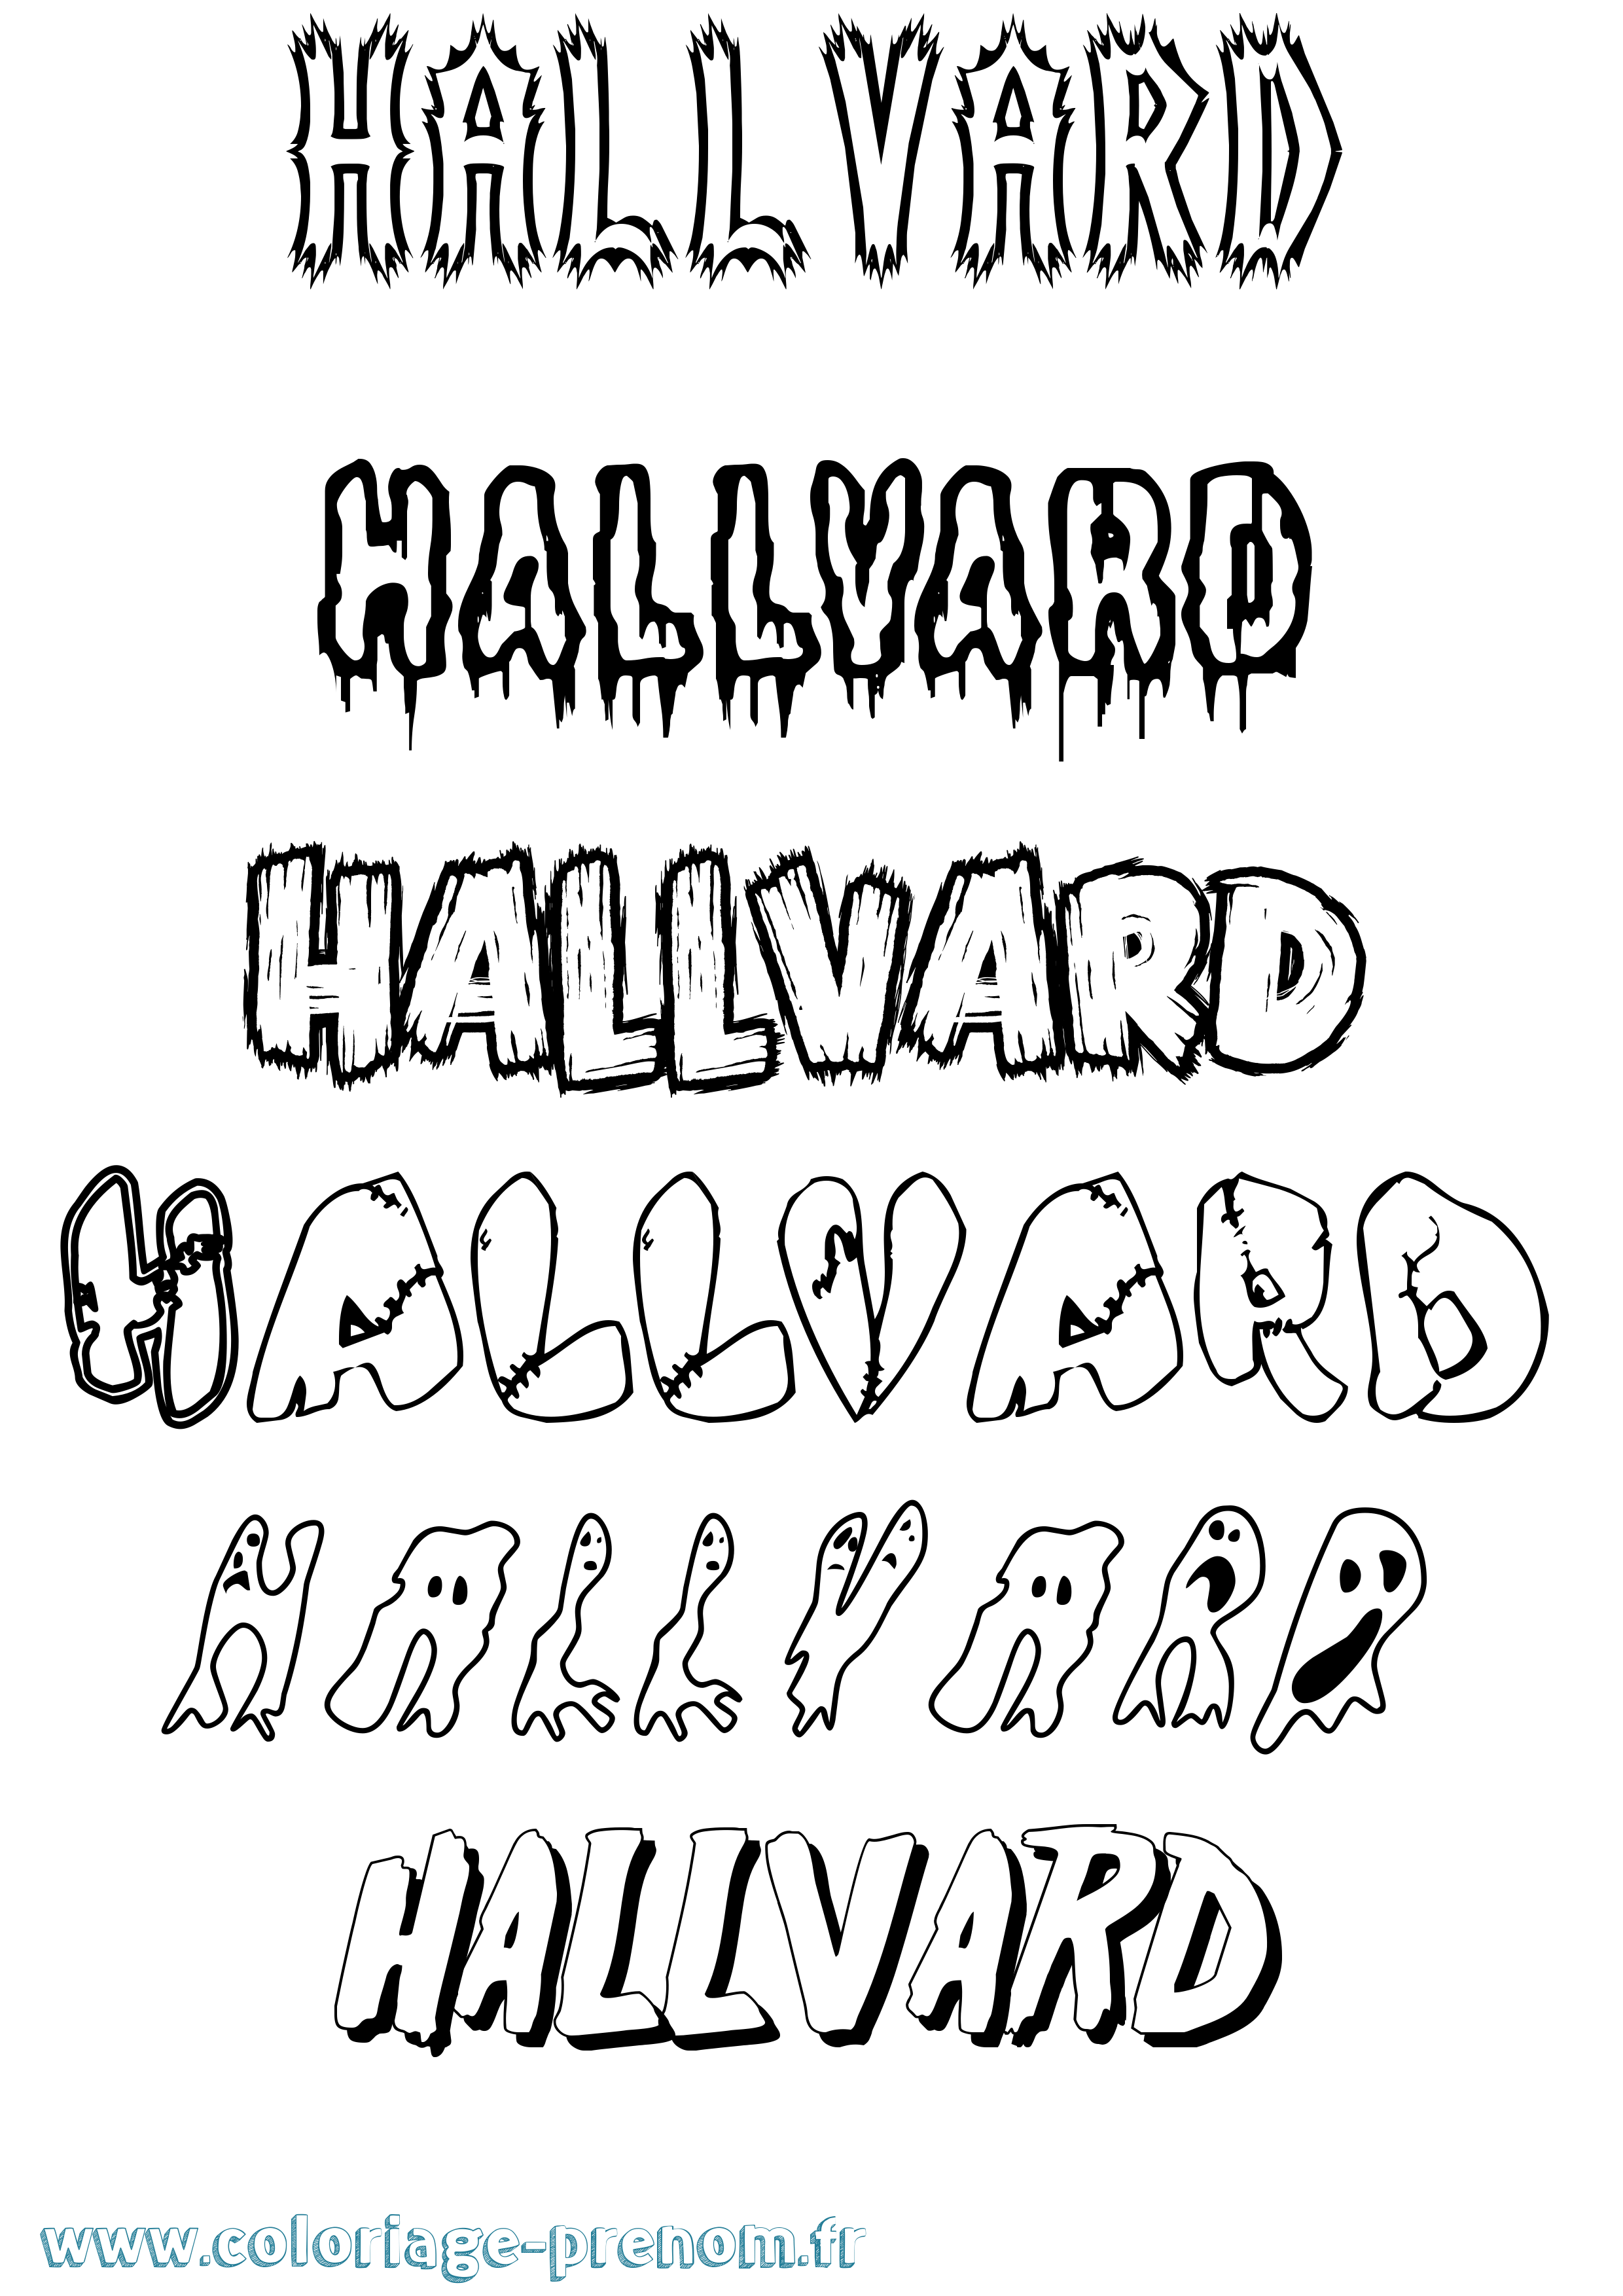 Coloriage prénom Hallvard Frisson